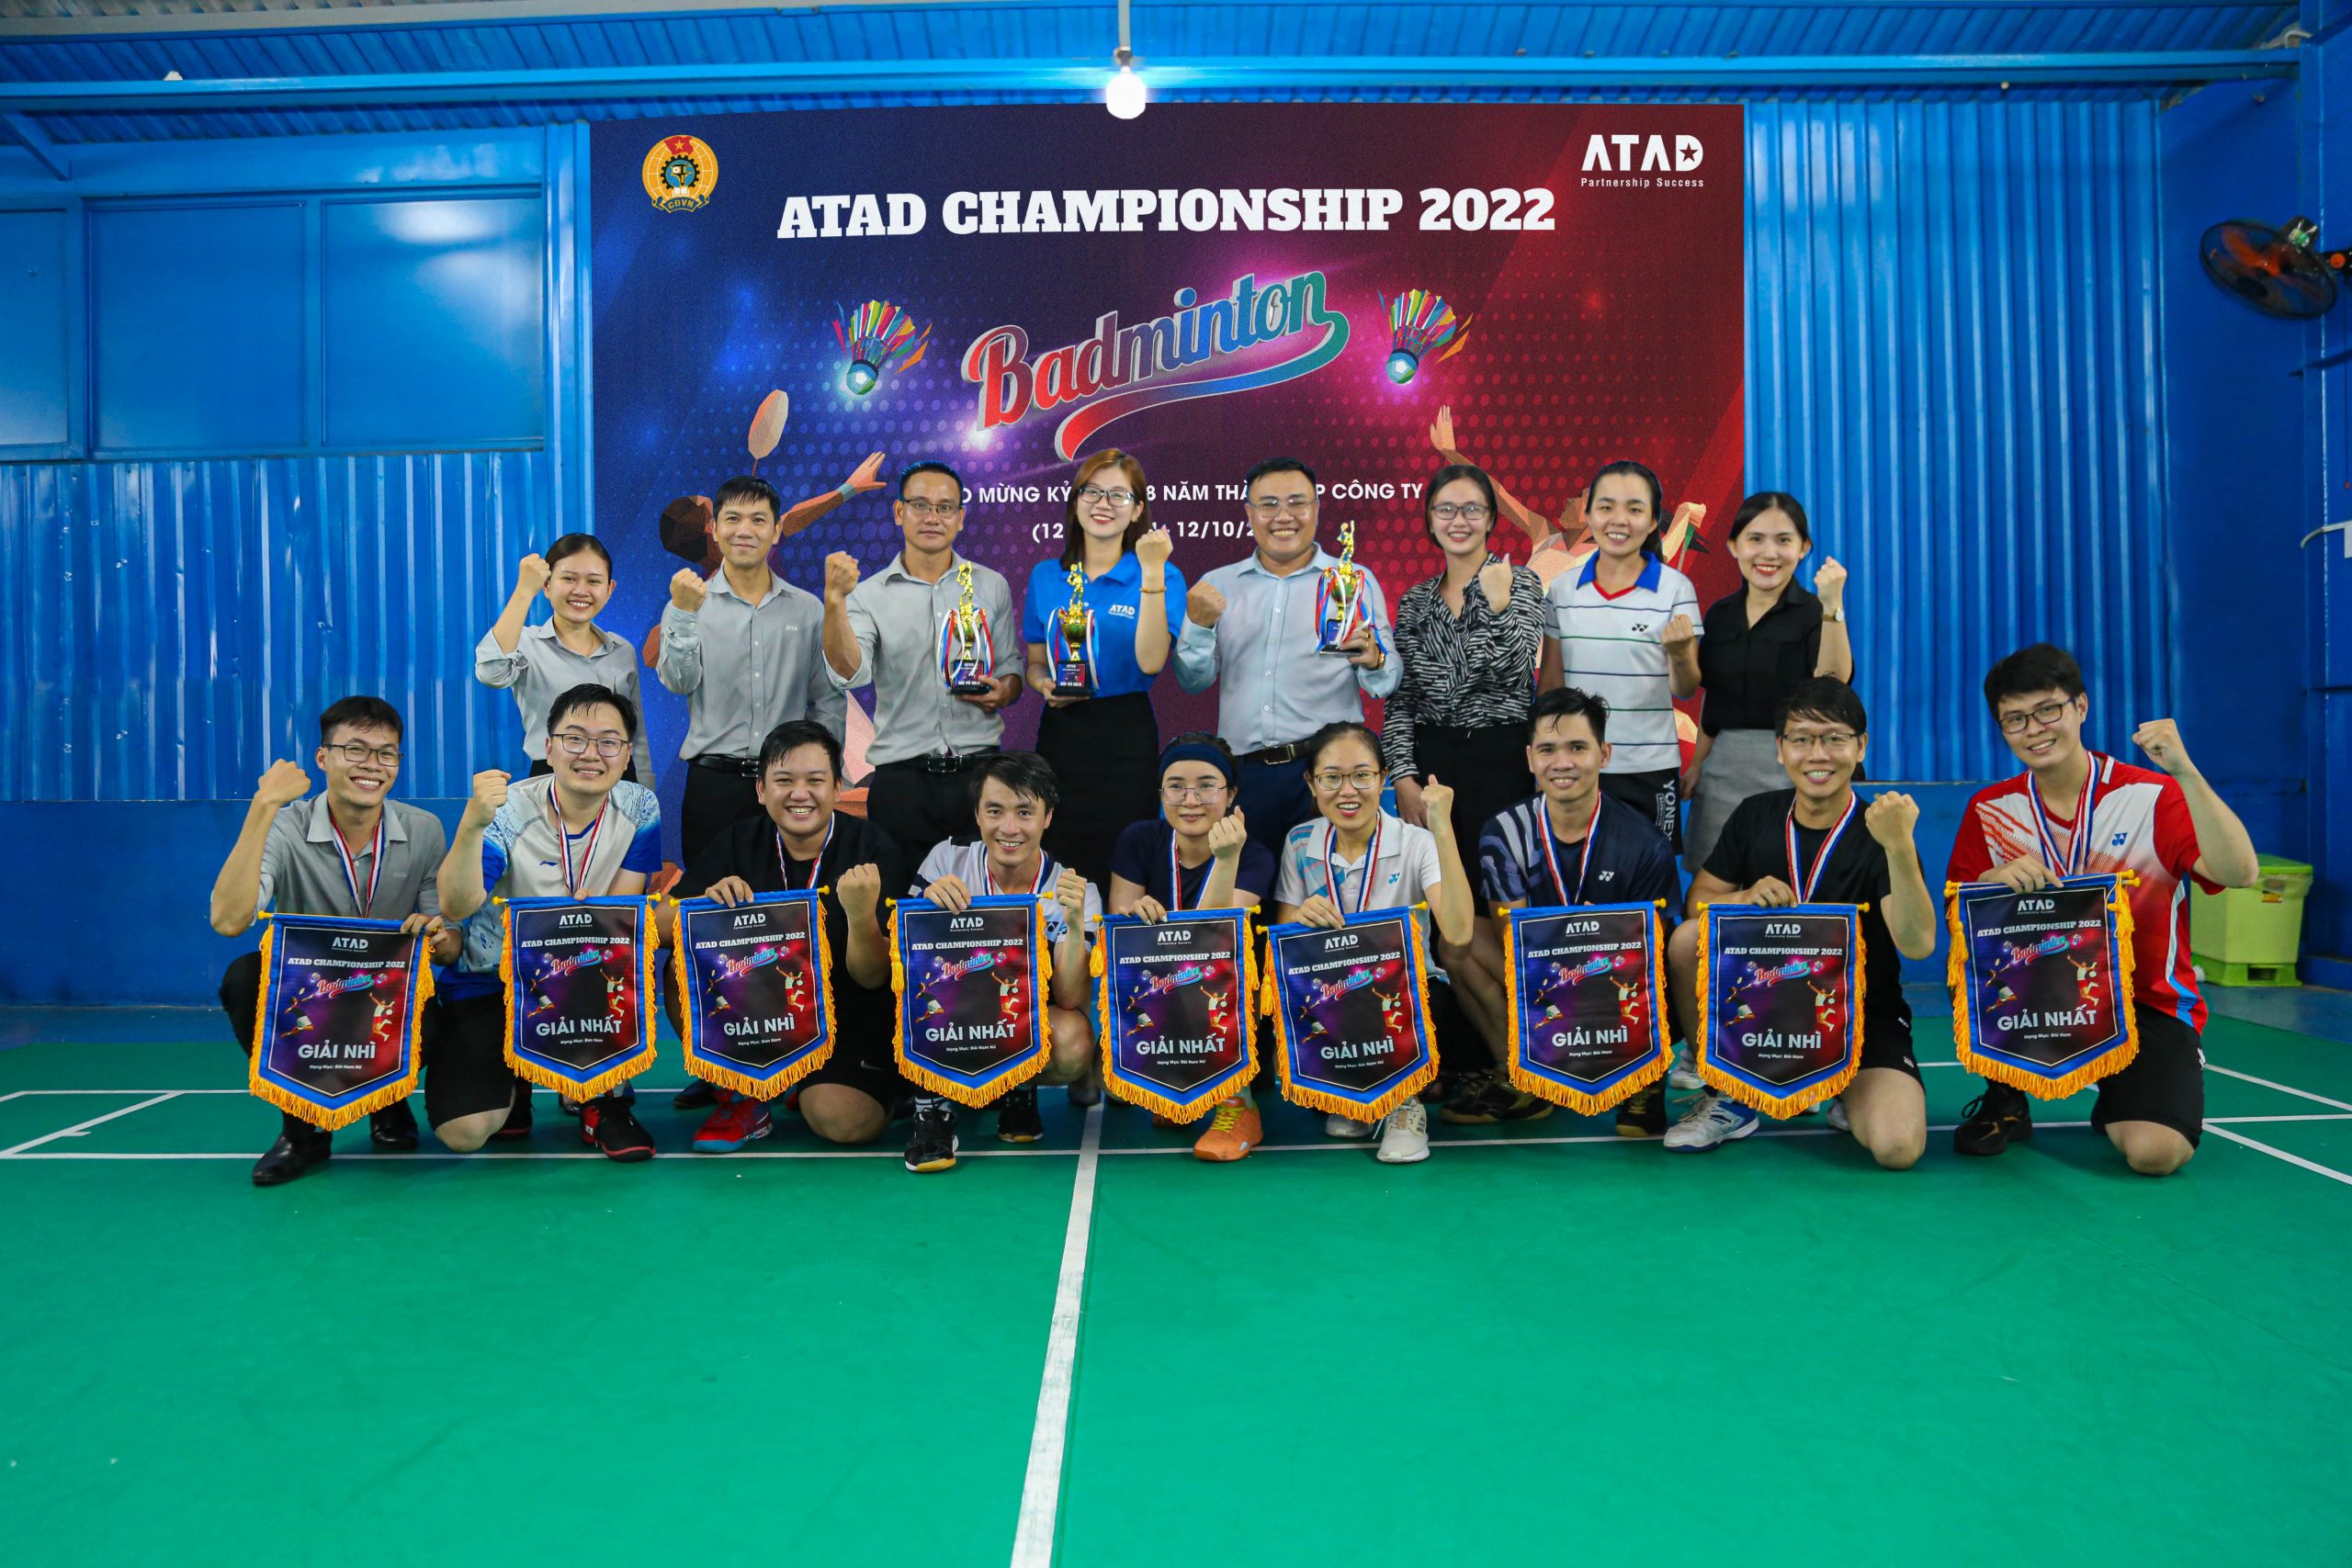 ATAD Championship 2022